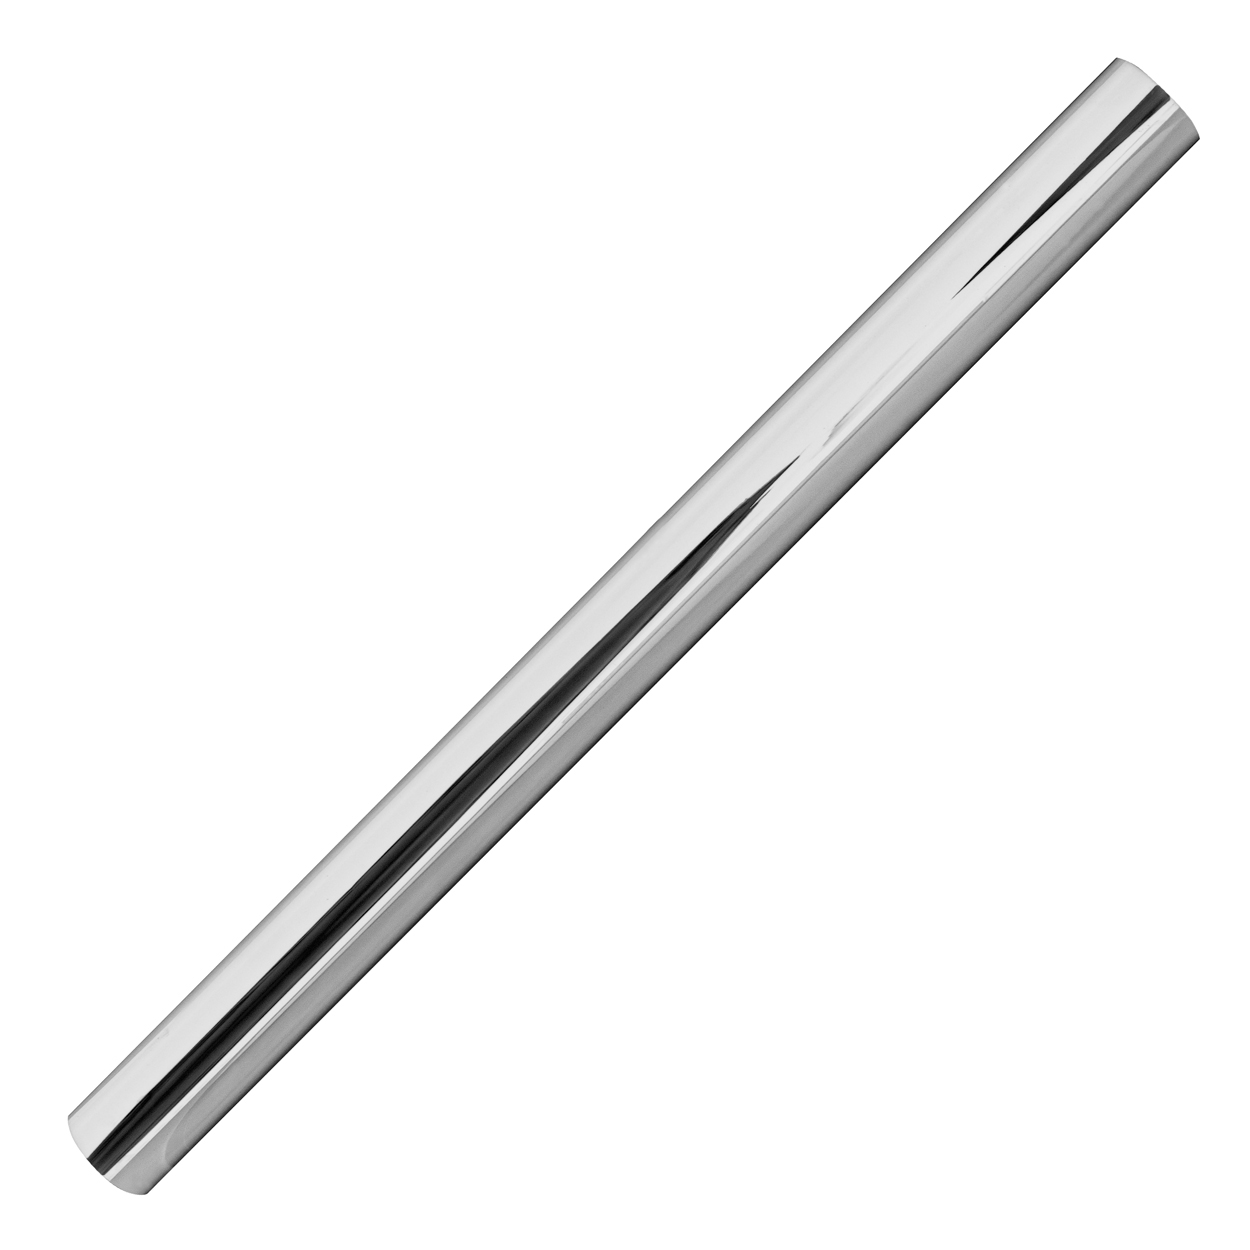 Folie solara pentru geam Amio, 50x300cm, transparenta 15% Dark Silver - Argintiu inchis thumb